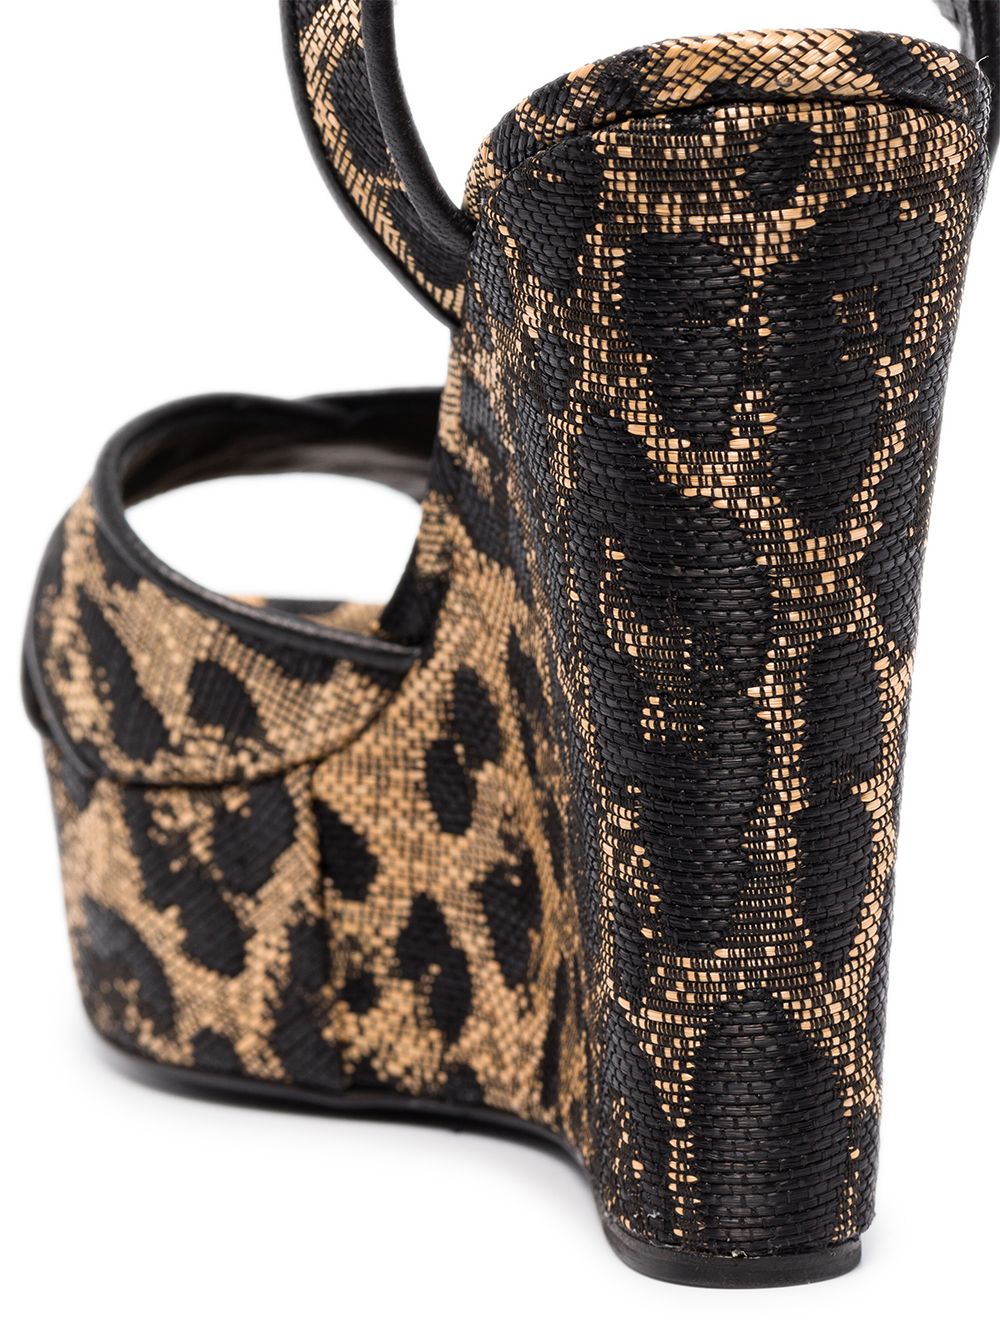 DIAXXH Leopard Print Sandals Women, New Leopard Wedge